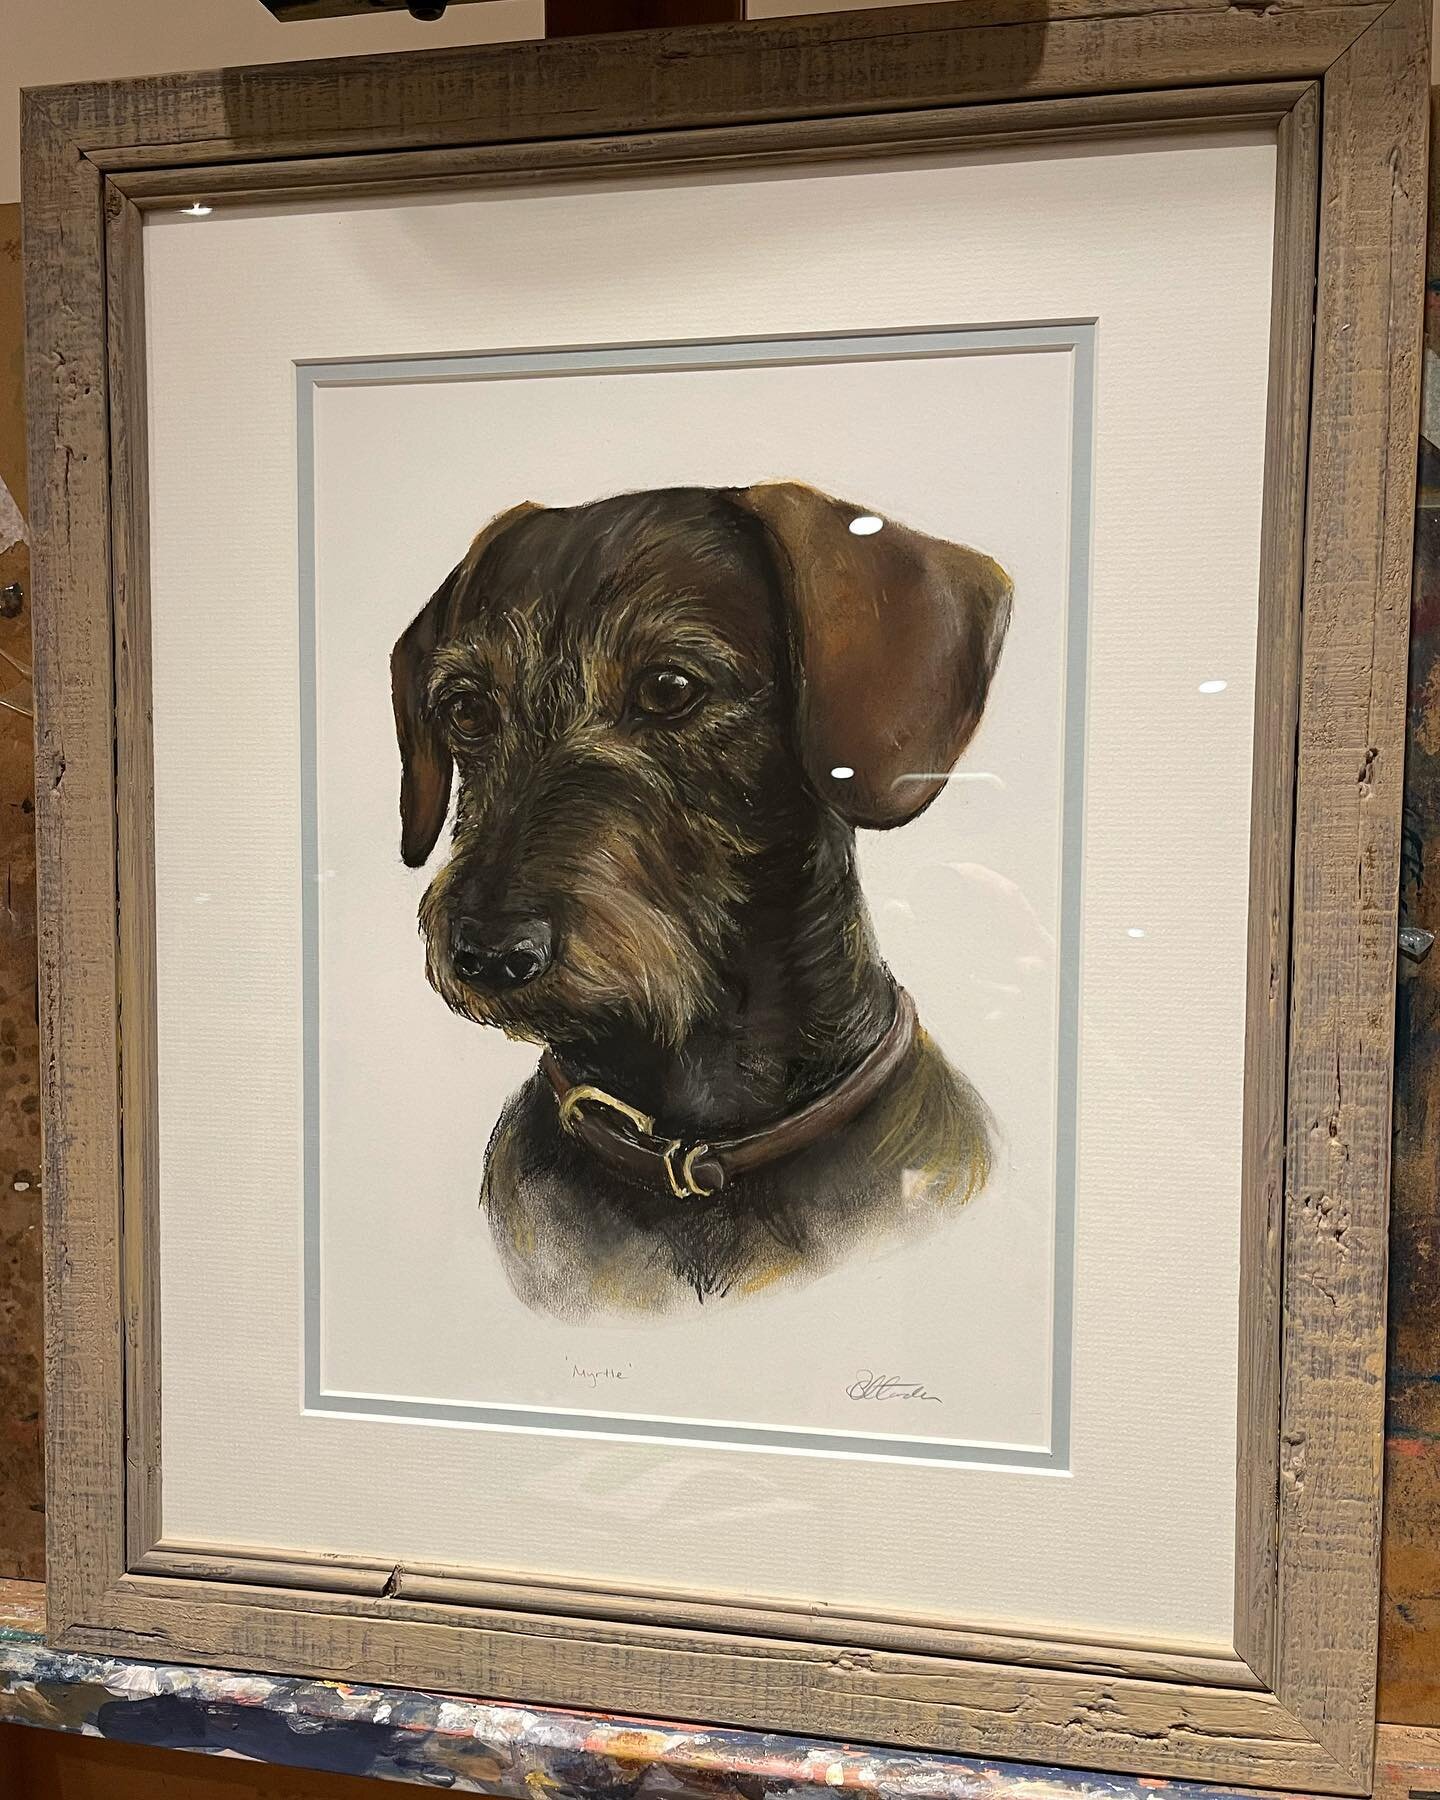 Gorgeous Myrtle framed and ready to go to home. #commission #bespoke #framed #pastel #dachshund #minidaschund #interiordesign #bespokeframe #dogsofinstagram #sophiehardenart